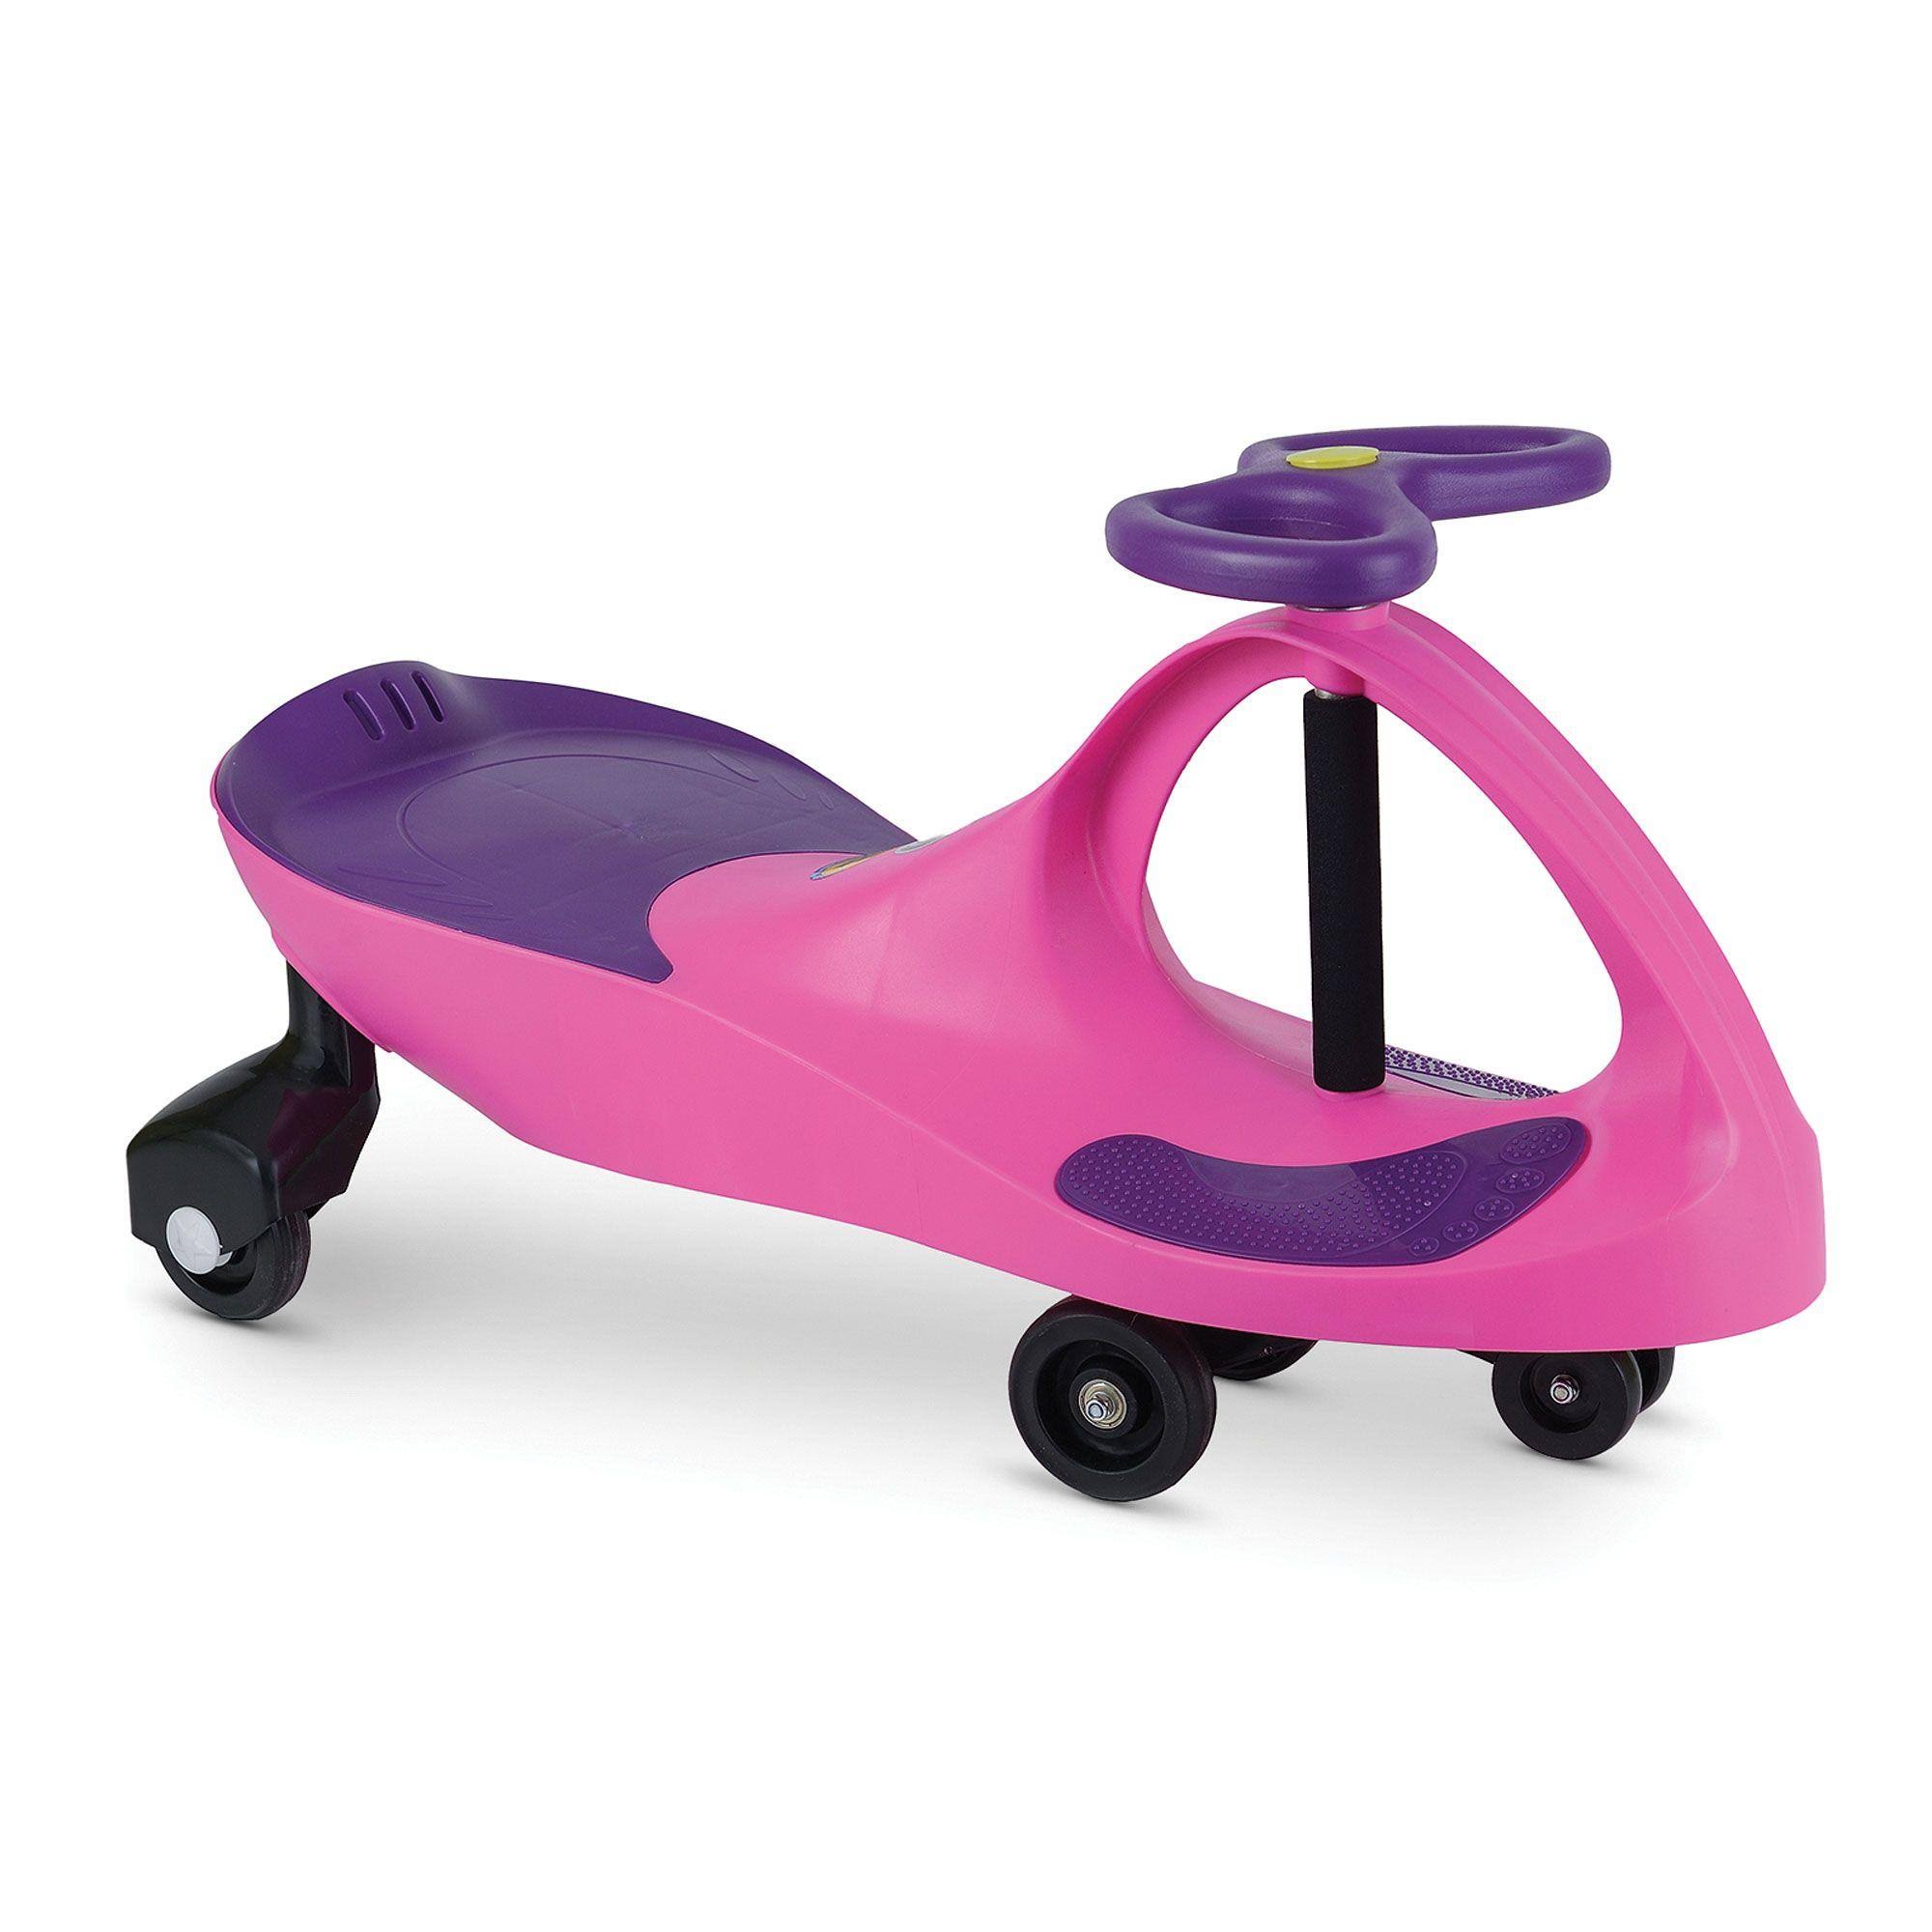 Plasmacar Ride On - Pink, Purple